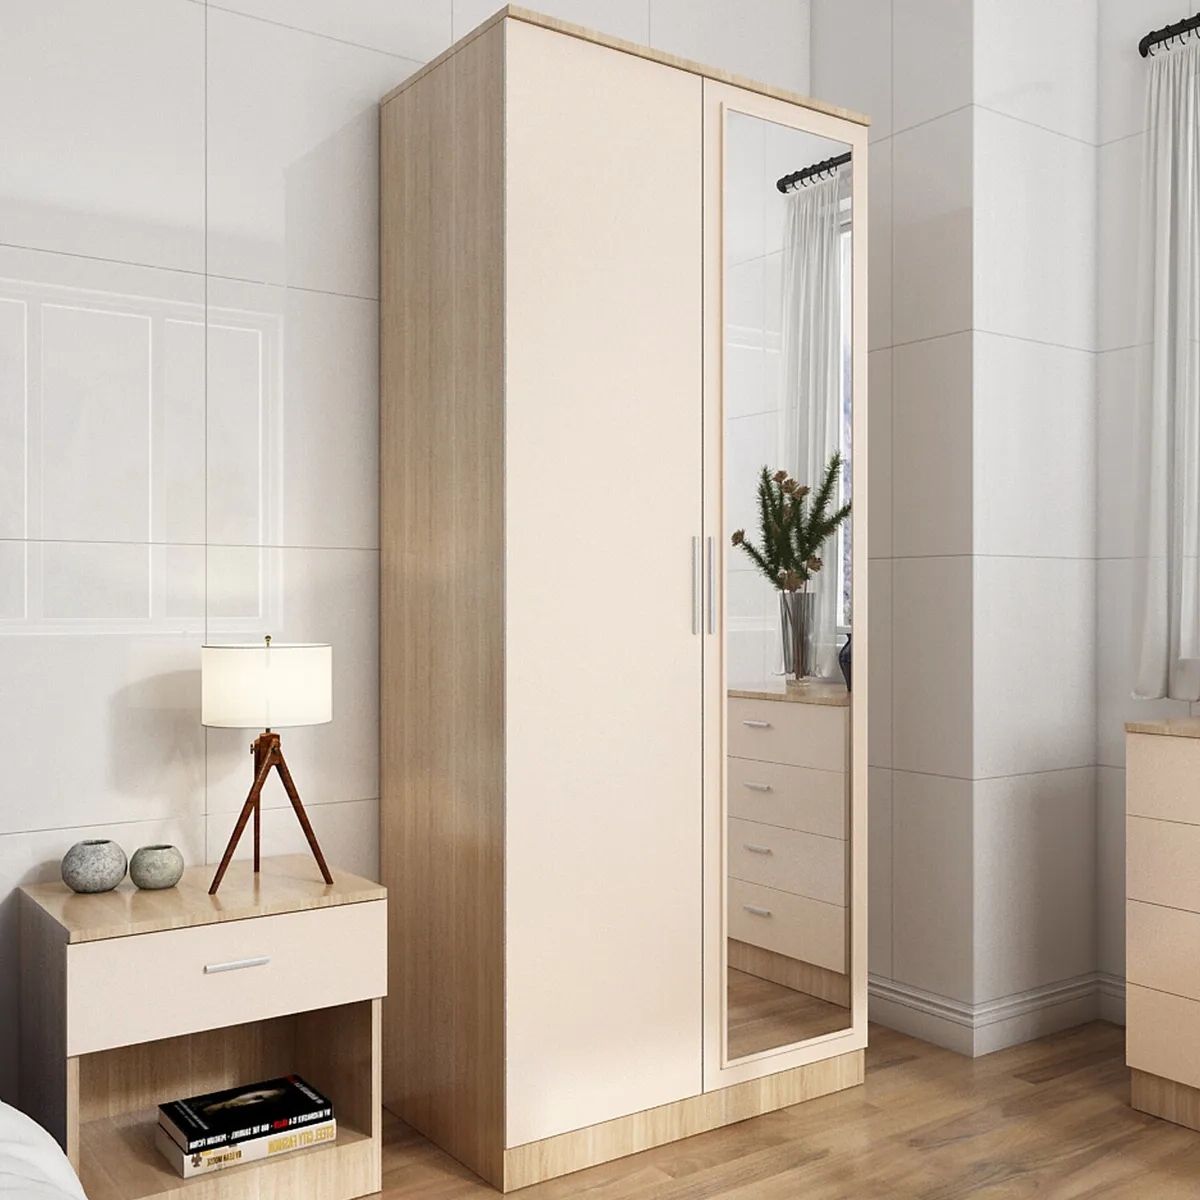 High Gloss Cream Wardrobe Double Door With Hanging Rail Bedroom Furniture  Set | Ebay In Cream Gloss Wardrobes Doors (View 5 of 20)